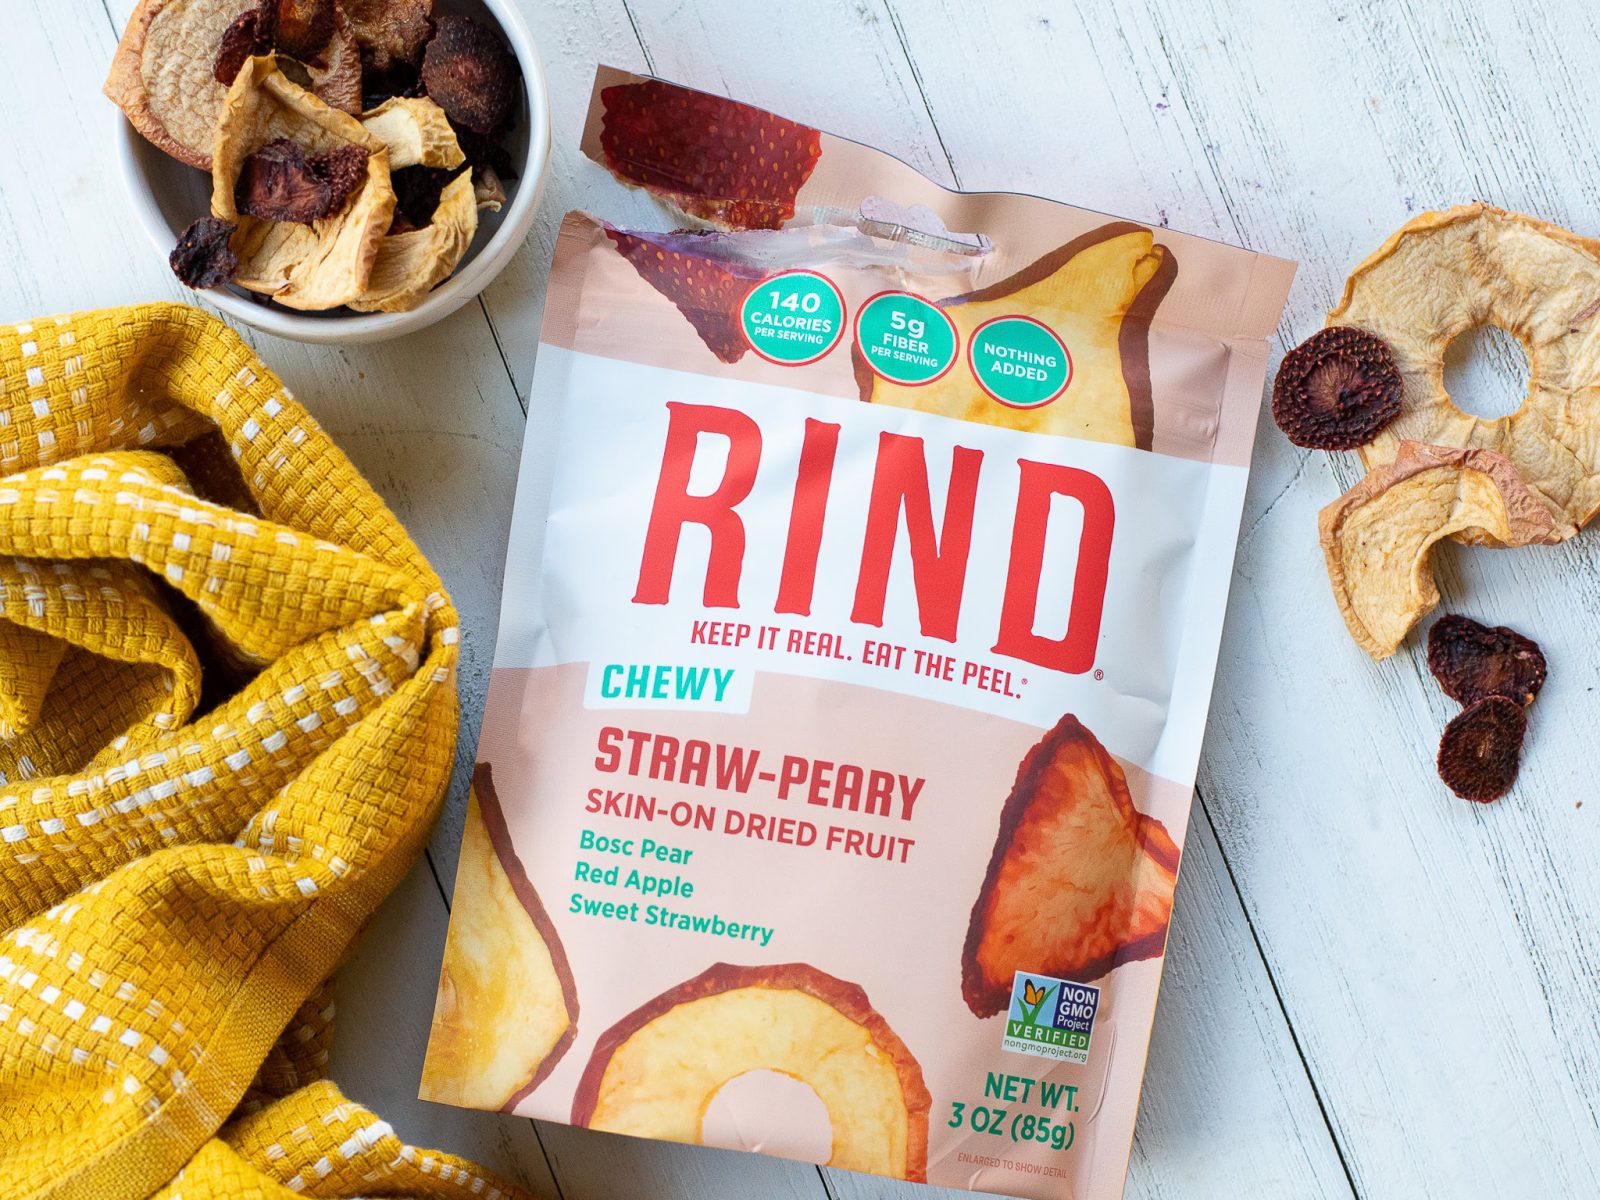 Rind Dried Fruit Just $2.50 Per Bag At Kroger – Half Price!